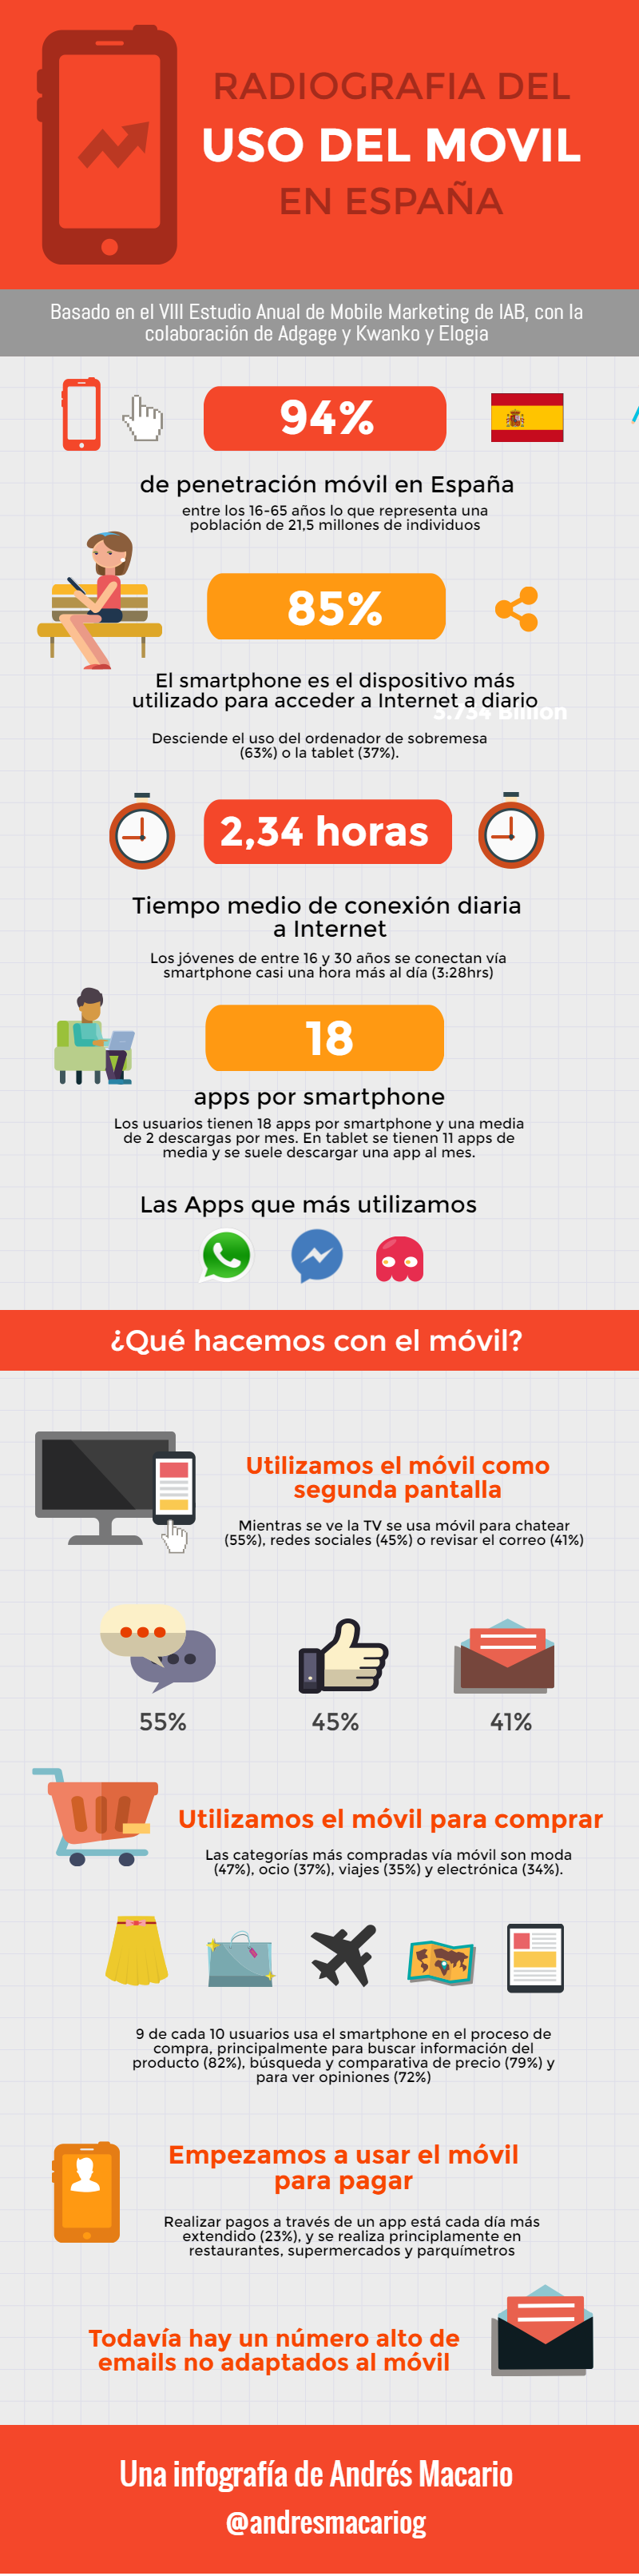 Radiografia del uso del móvil en España - Infografia Andres Macario